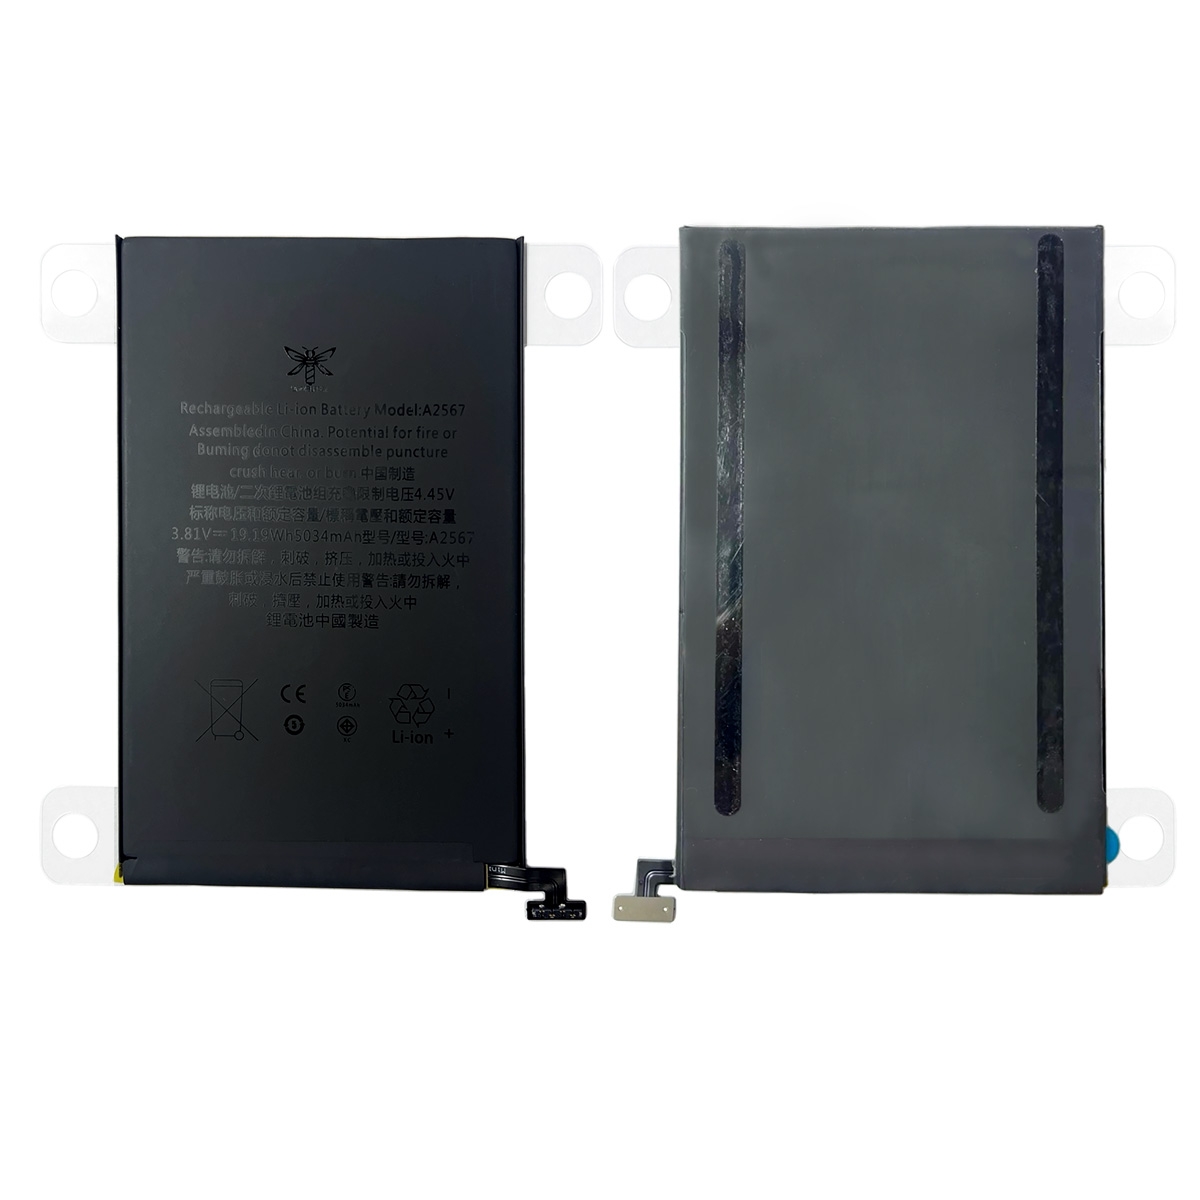 3.81V 5034mAh Battery for iPad mini 6